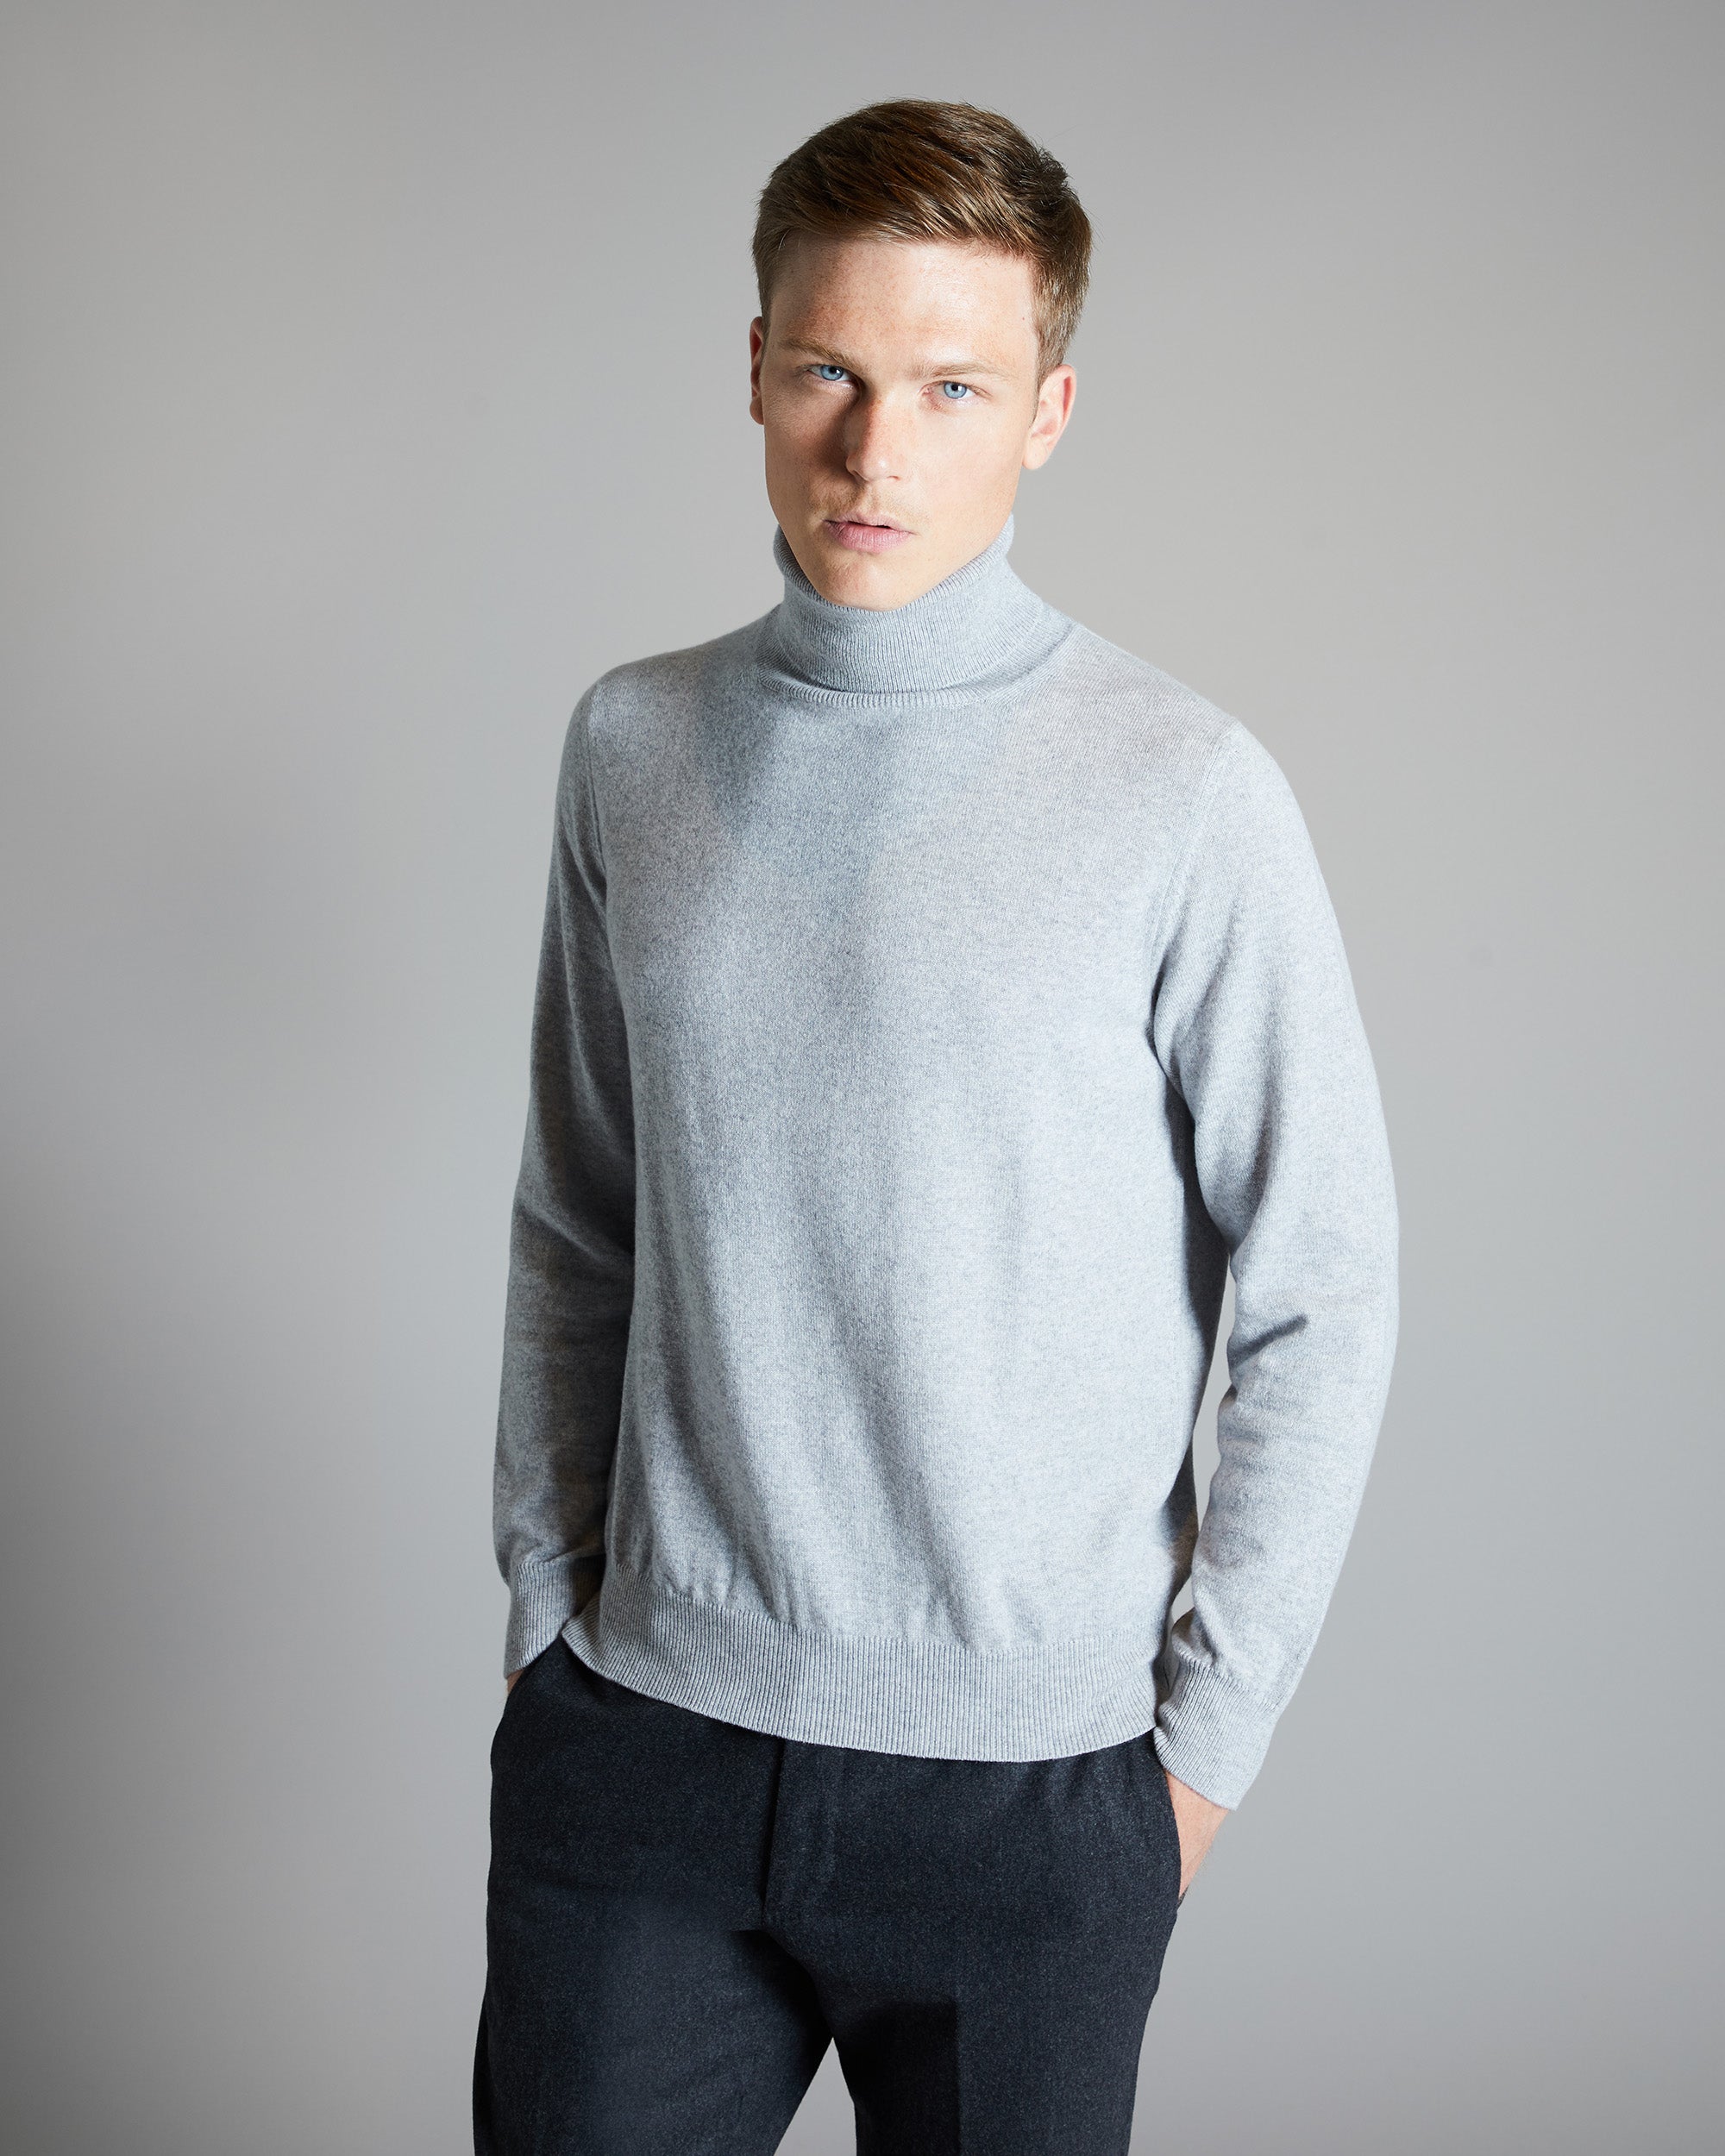 Light grey Kid Cashmere turtleneck sweater